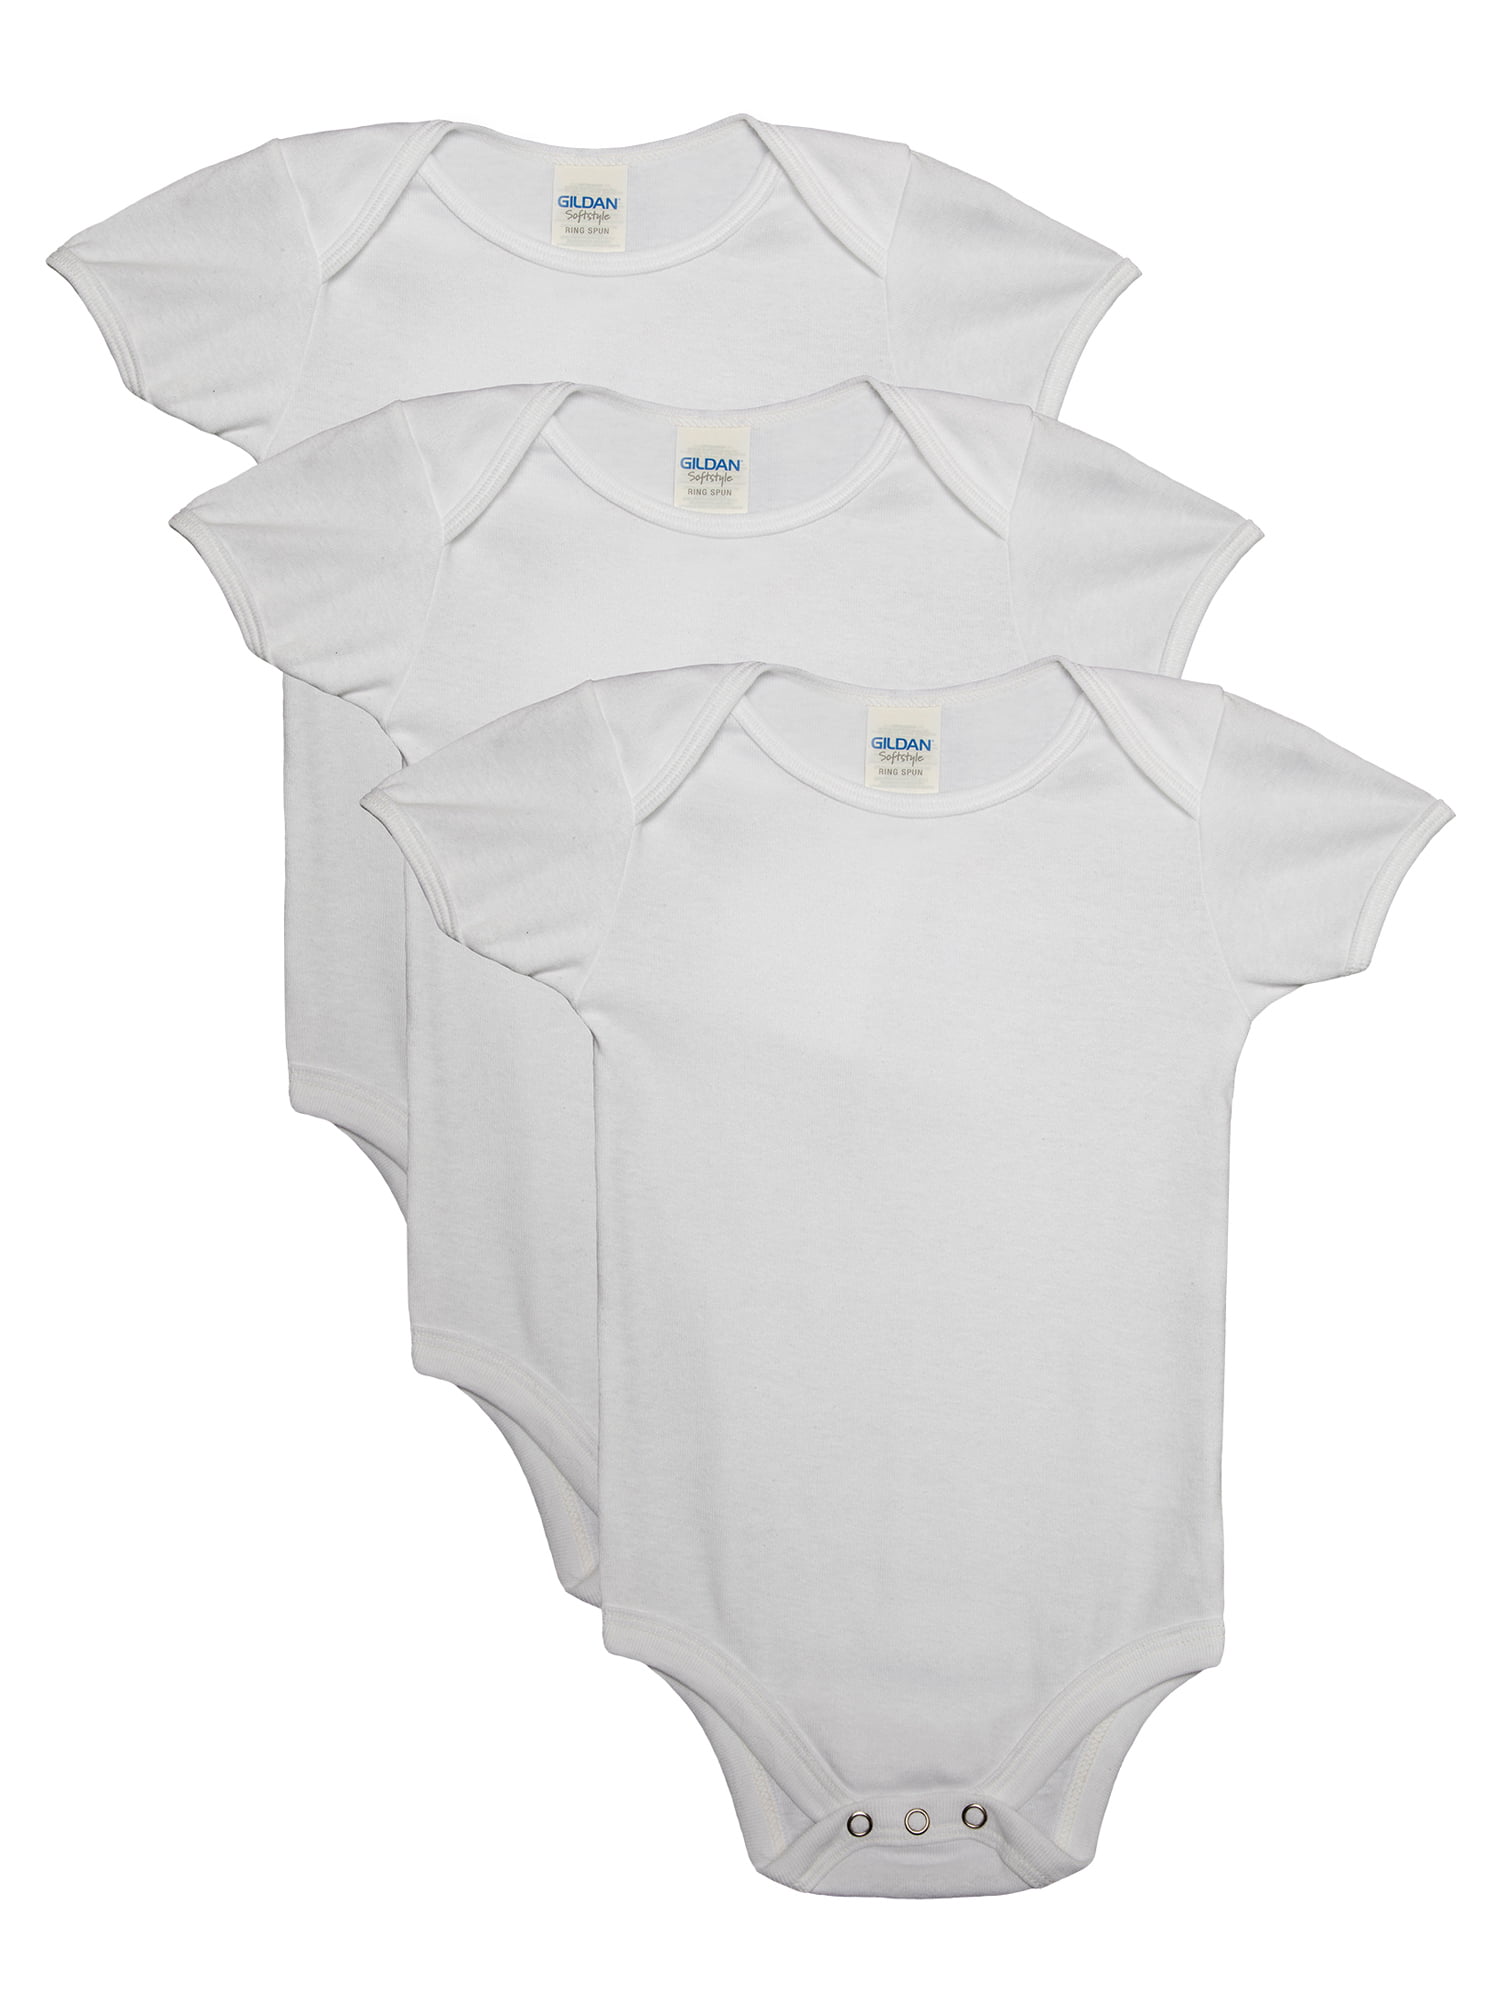 George Tiny Baby White Boy Girl 3 Pack Bodysuit Short Sleeve Sleepsuit Vest